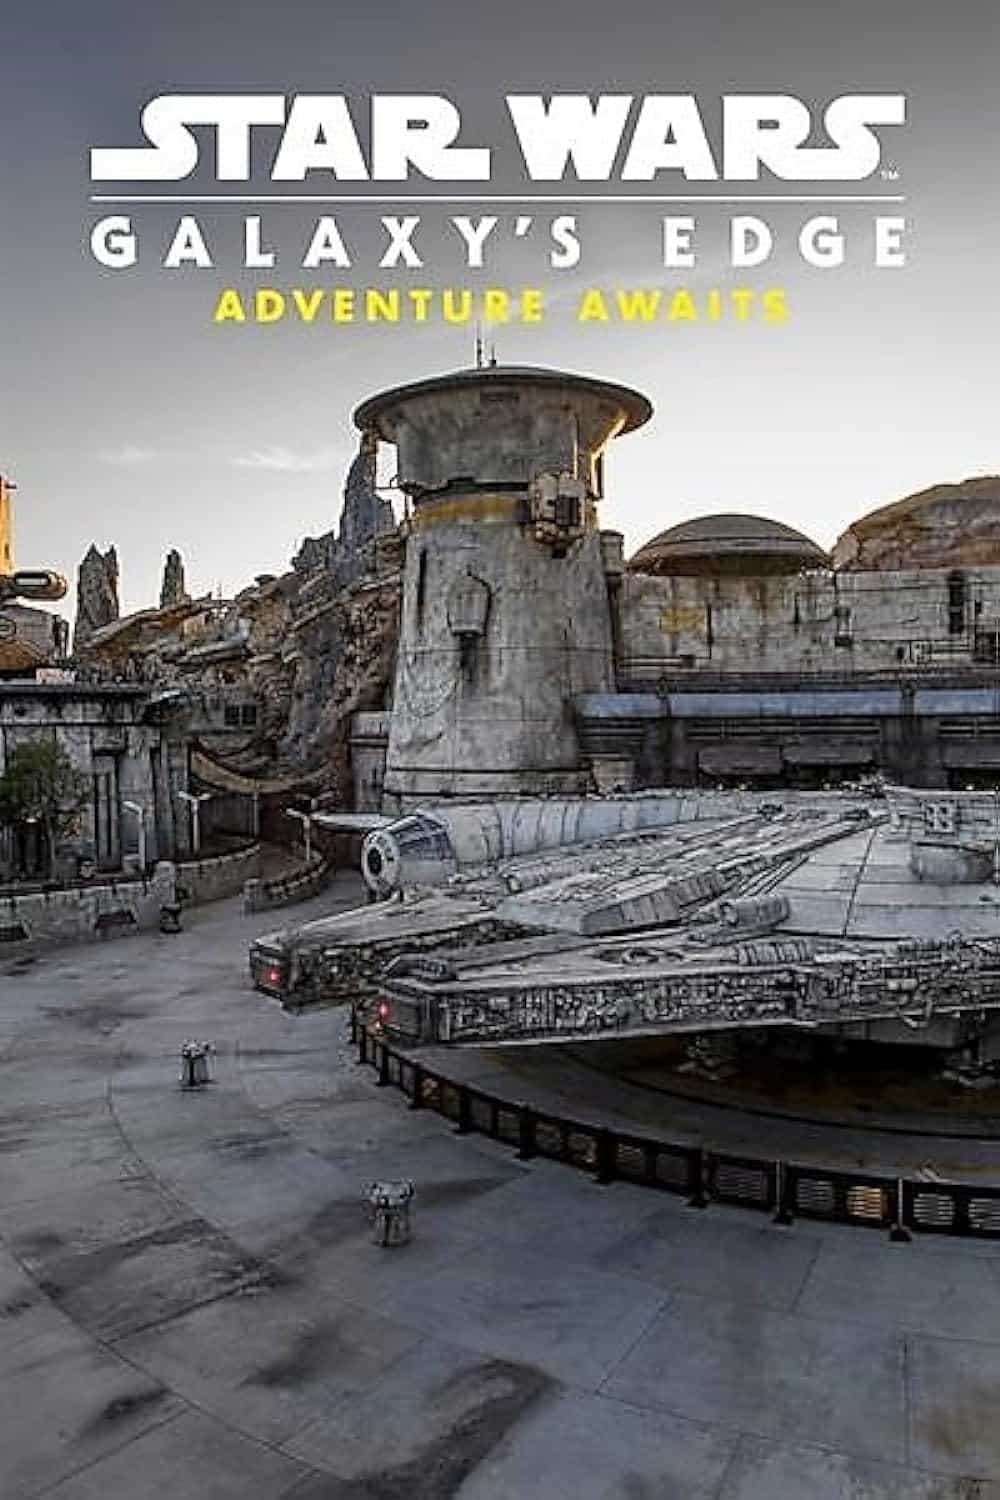 Star Wars Galaxys Edge opens in Disneyland Friday May 31st 2019